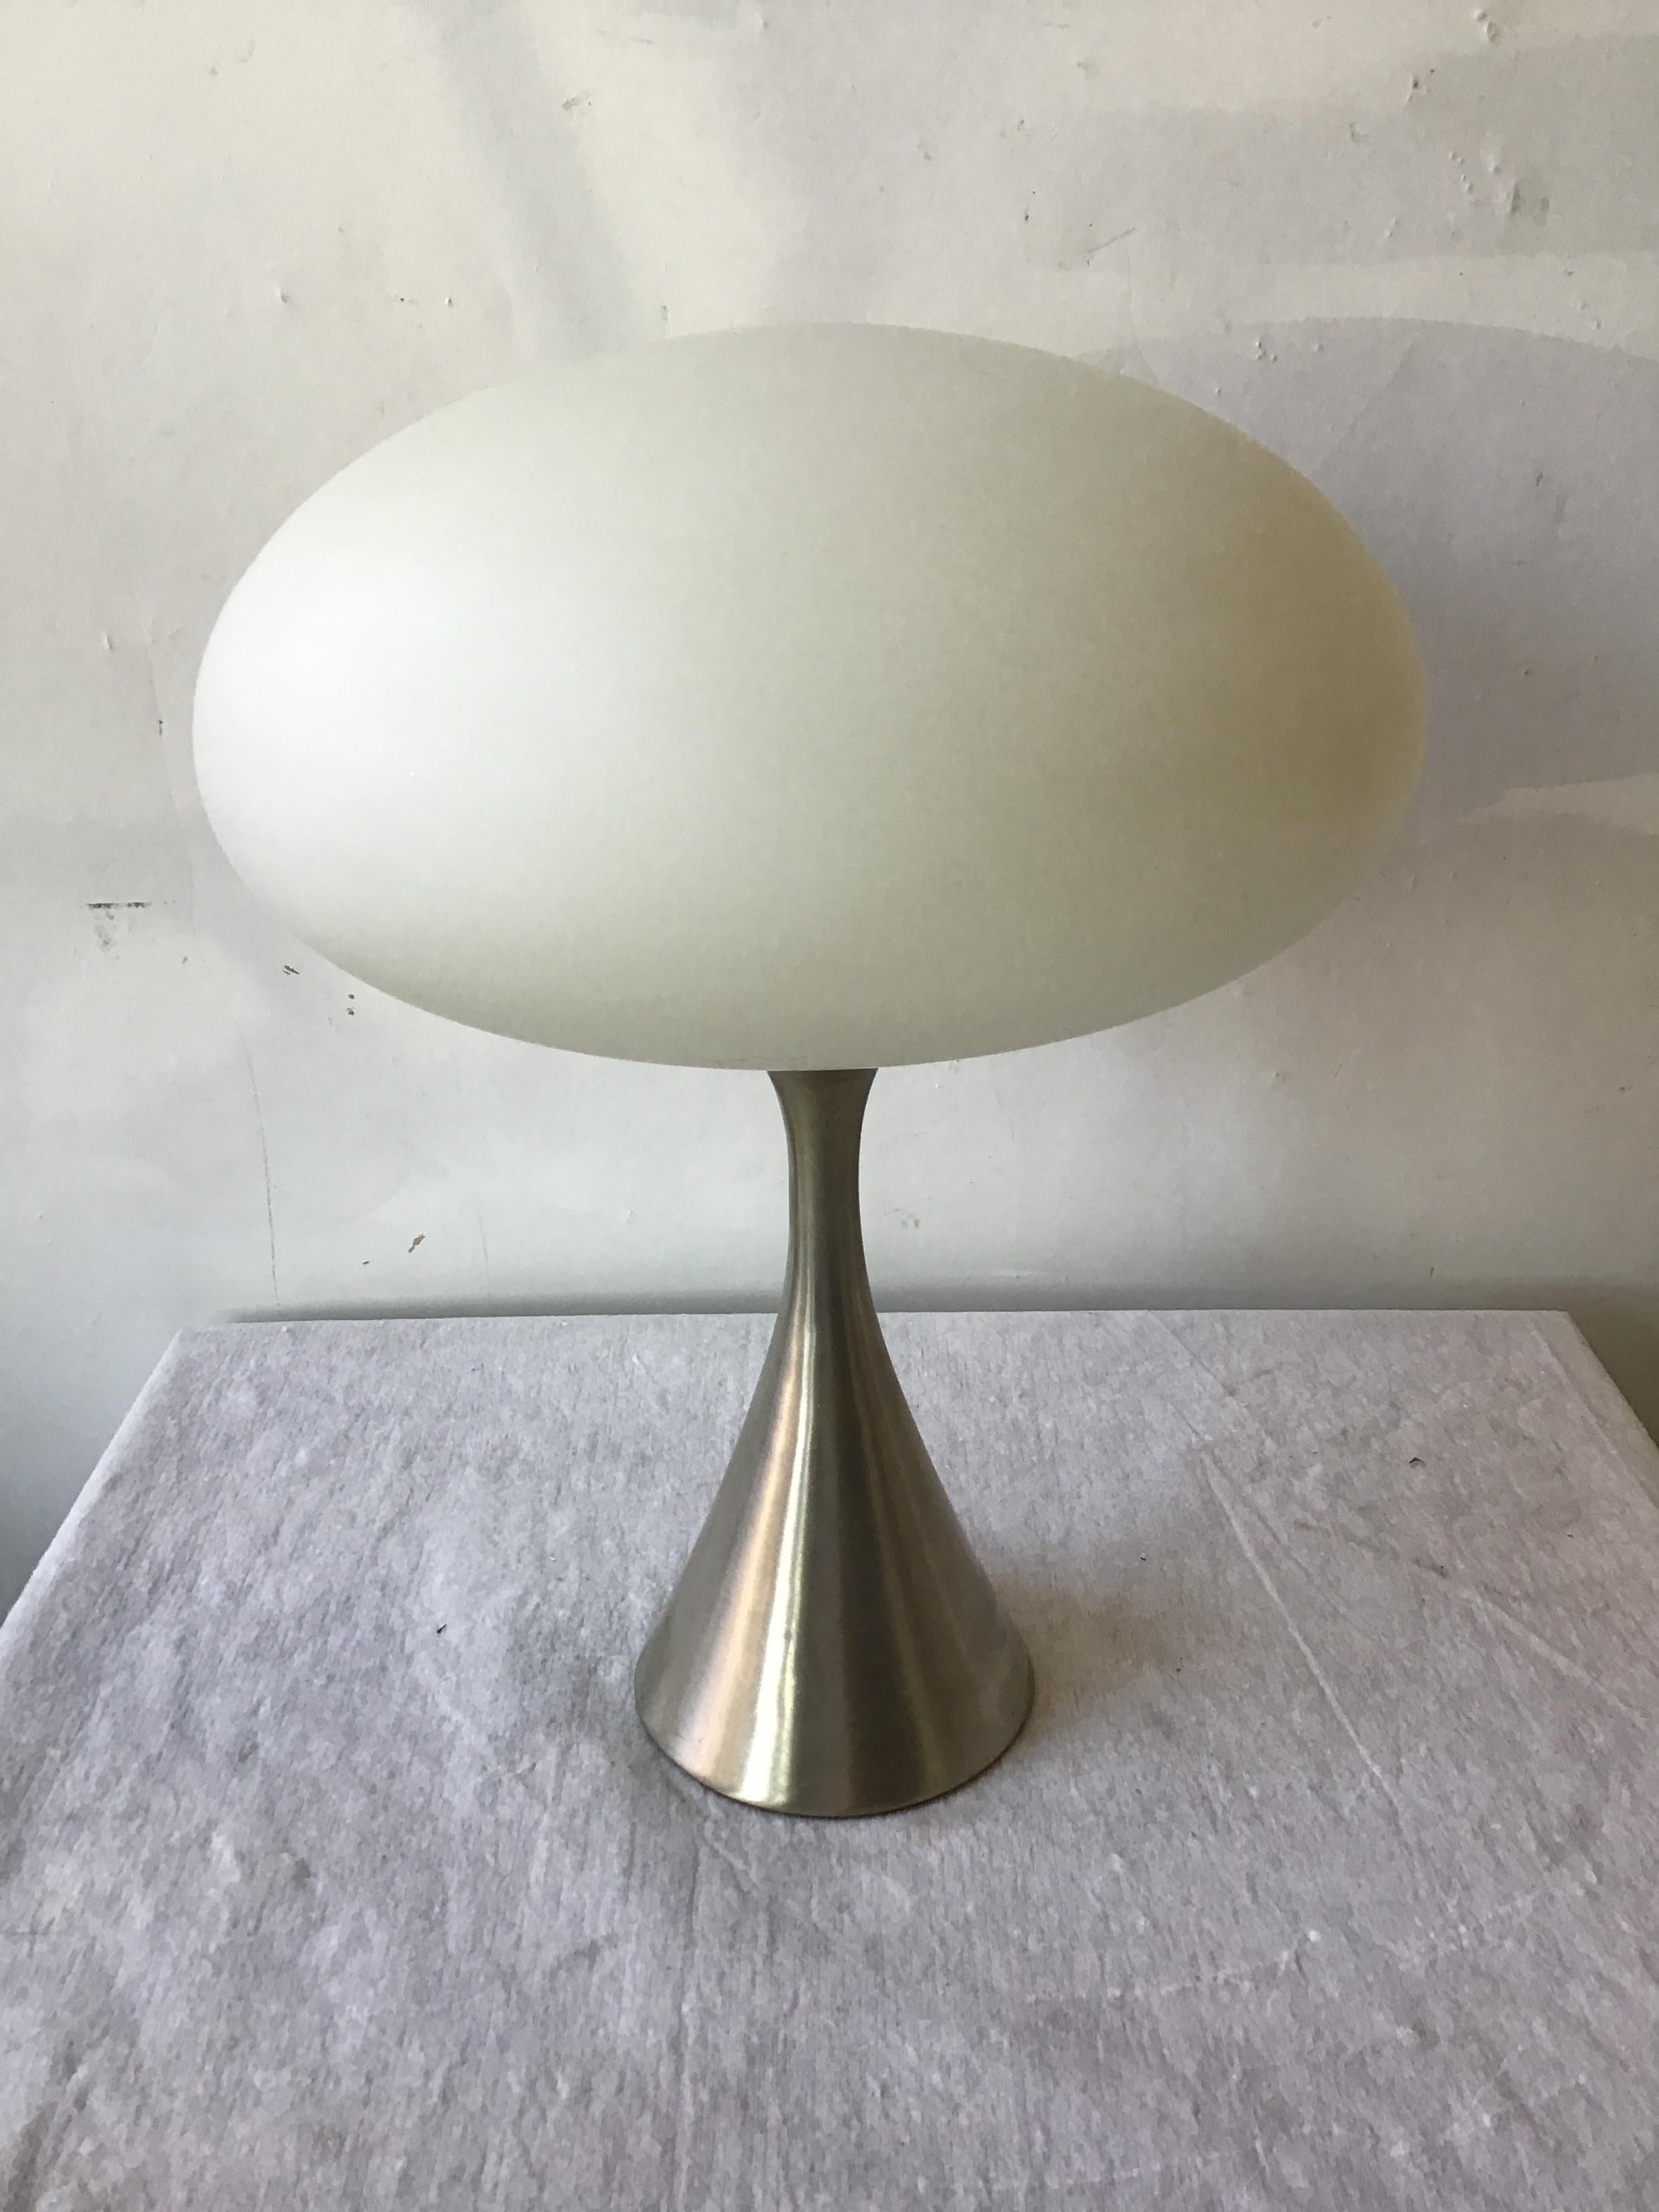 1960s Laurel Mushroom lamp. Brushed aluminum base.